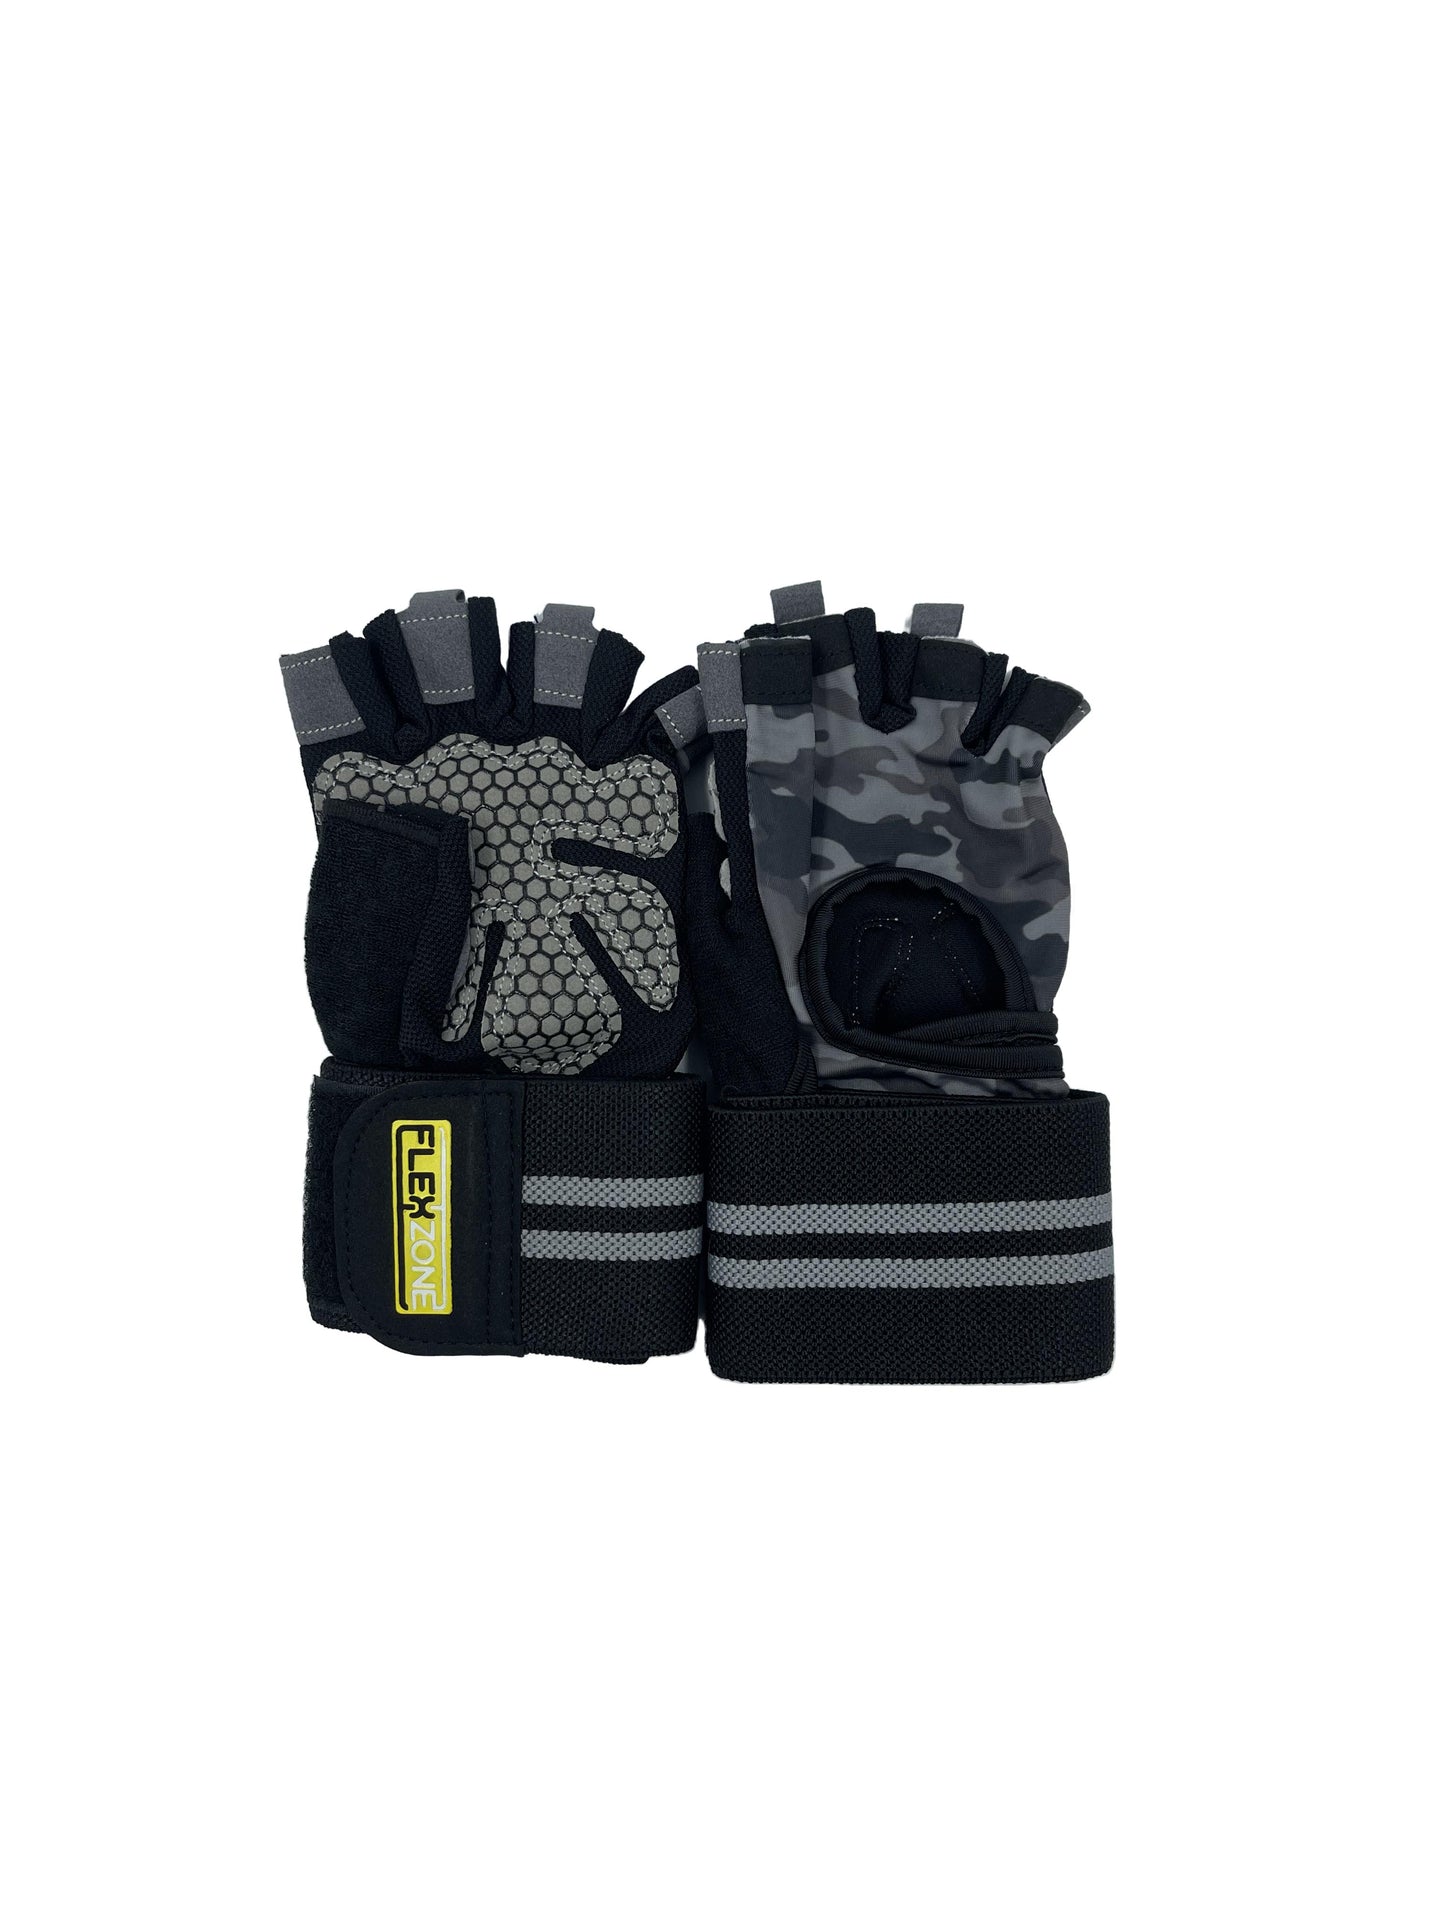 Flexzone Workout Gloves with Wrist Wraps - قفازات التمرين مع أربطة المعصم من فليكس زون